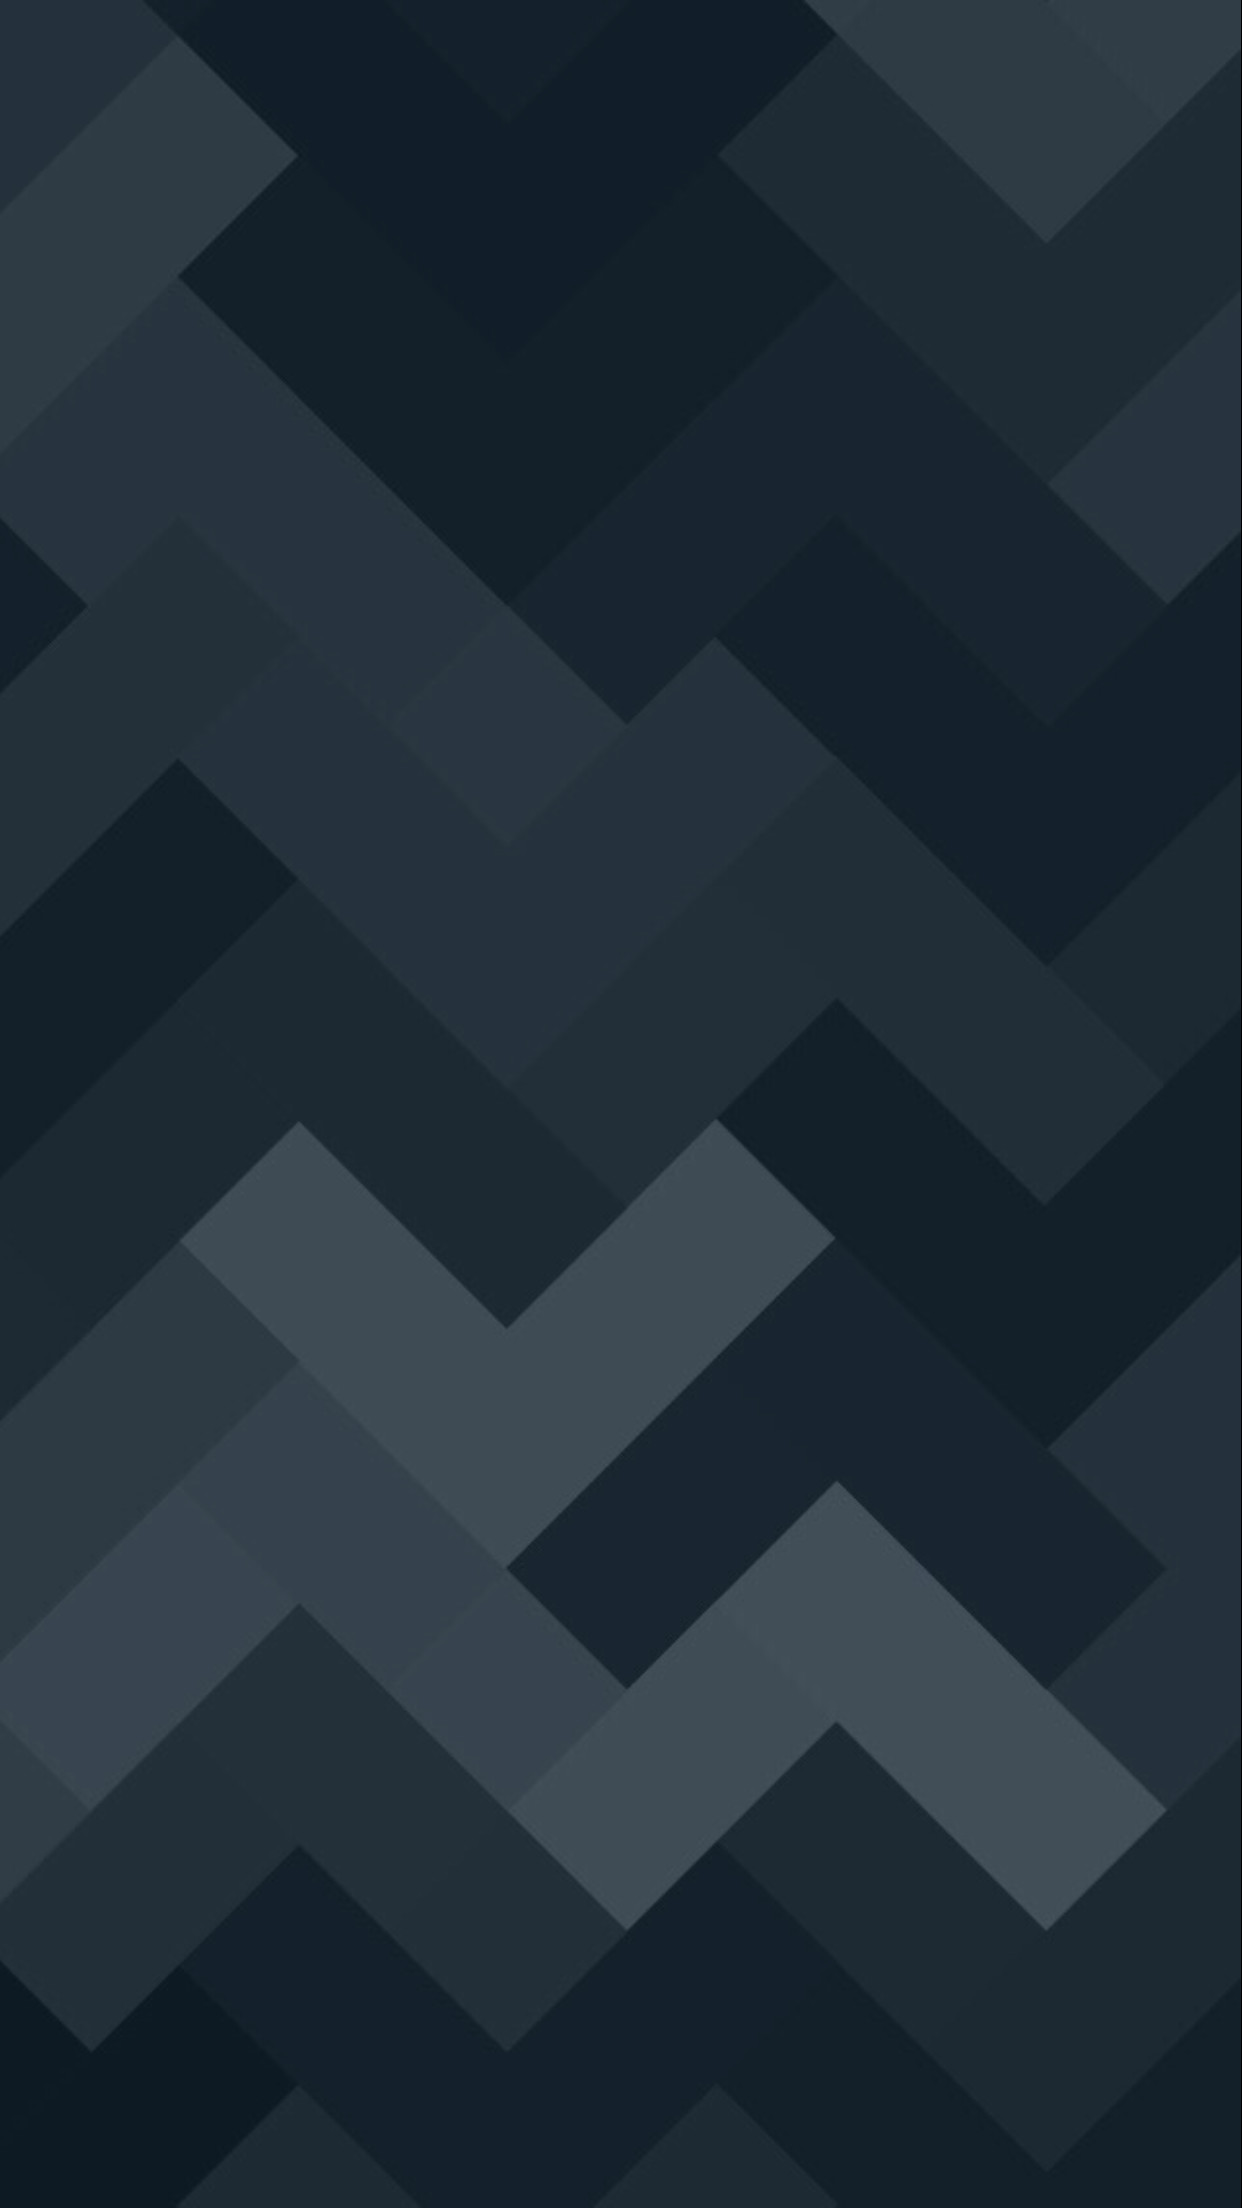 1242x2208 Shapes Black Wallpaper iPhone 6 Plus. Simple minimal points